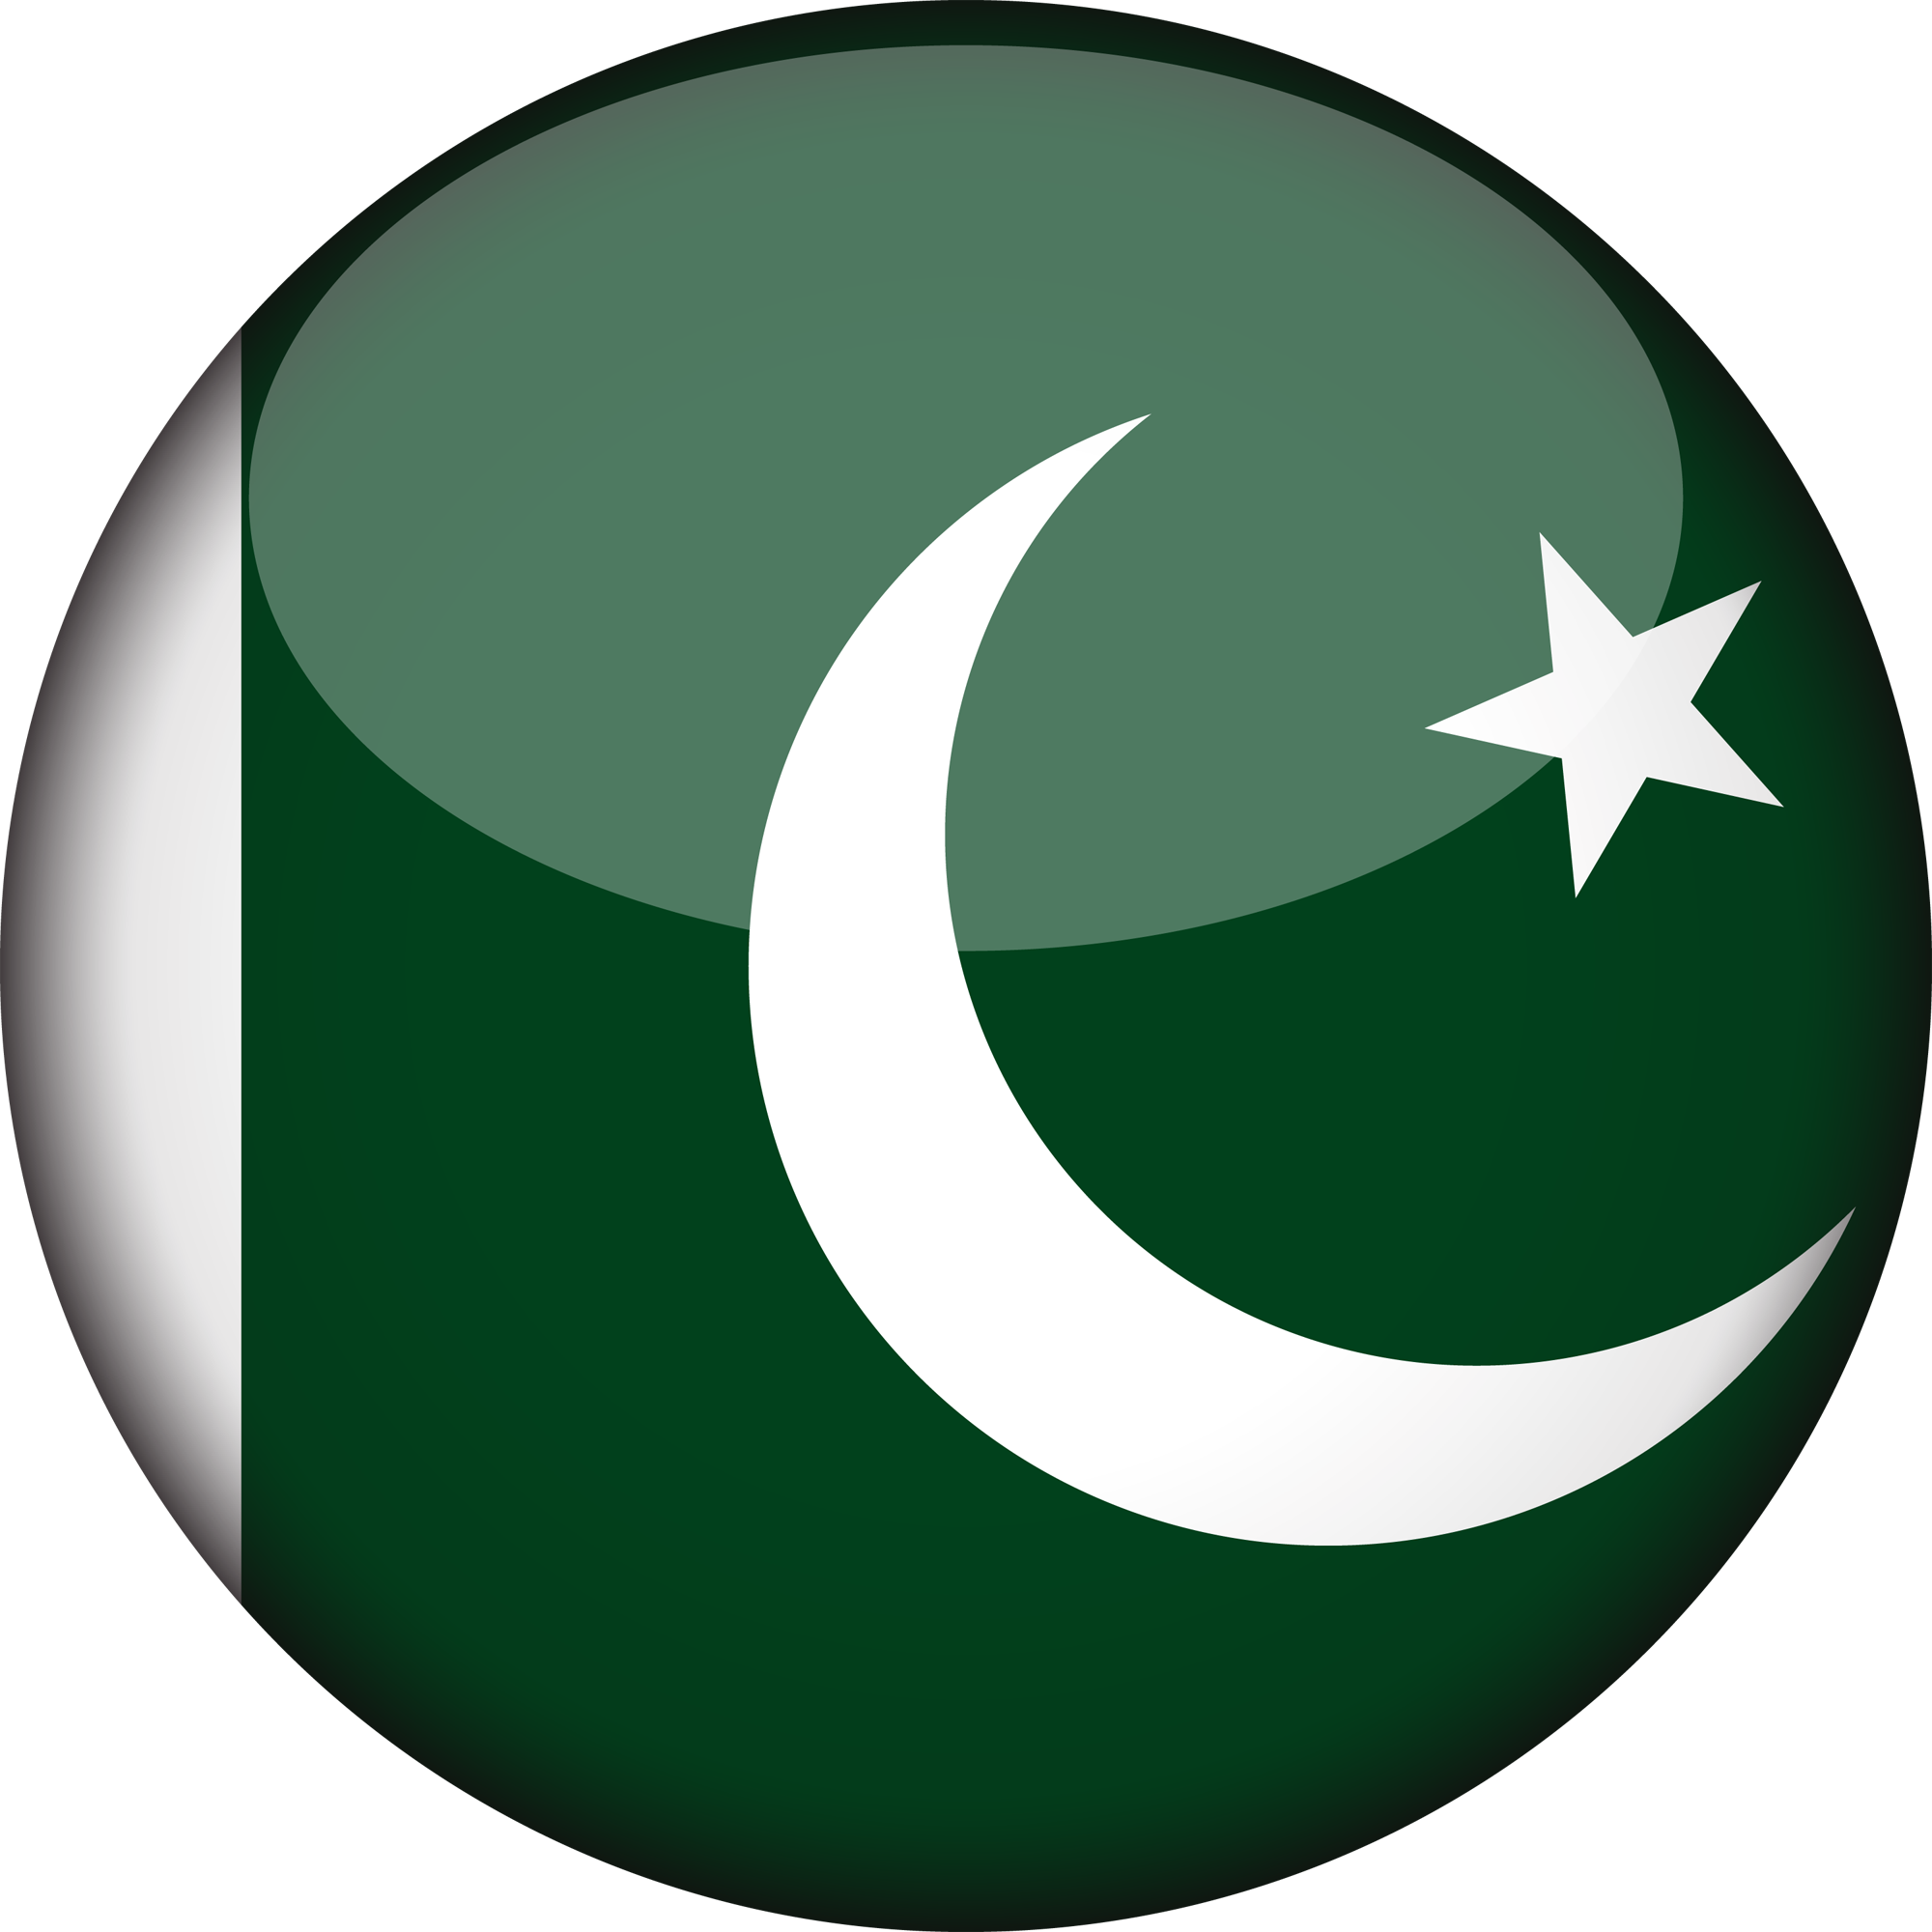 Pakistan Flag Png Clip Art | Images and Photos finder